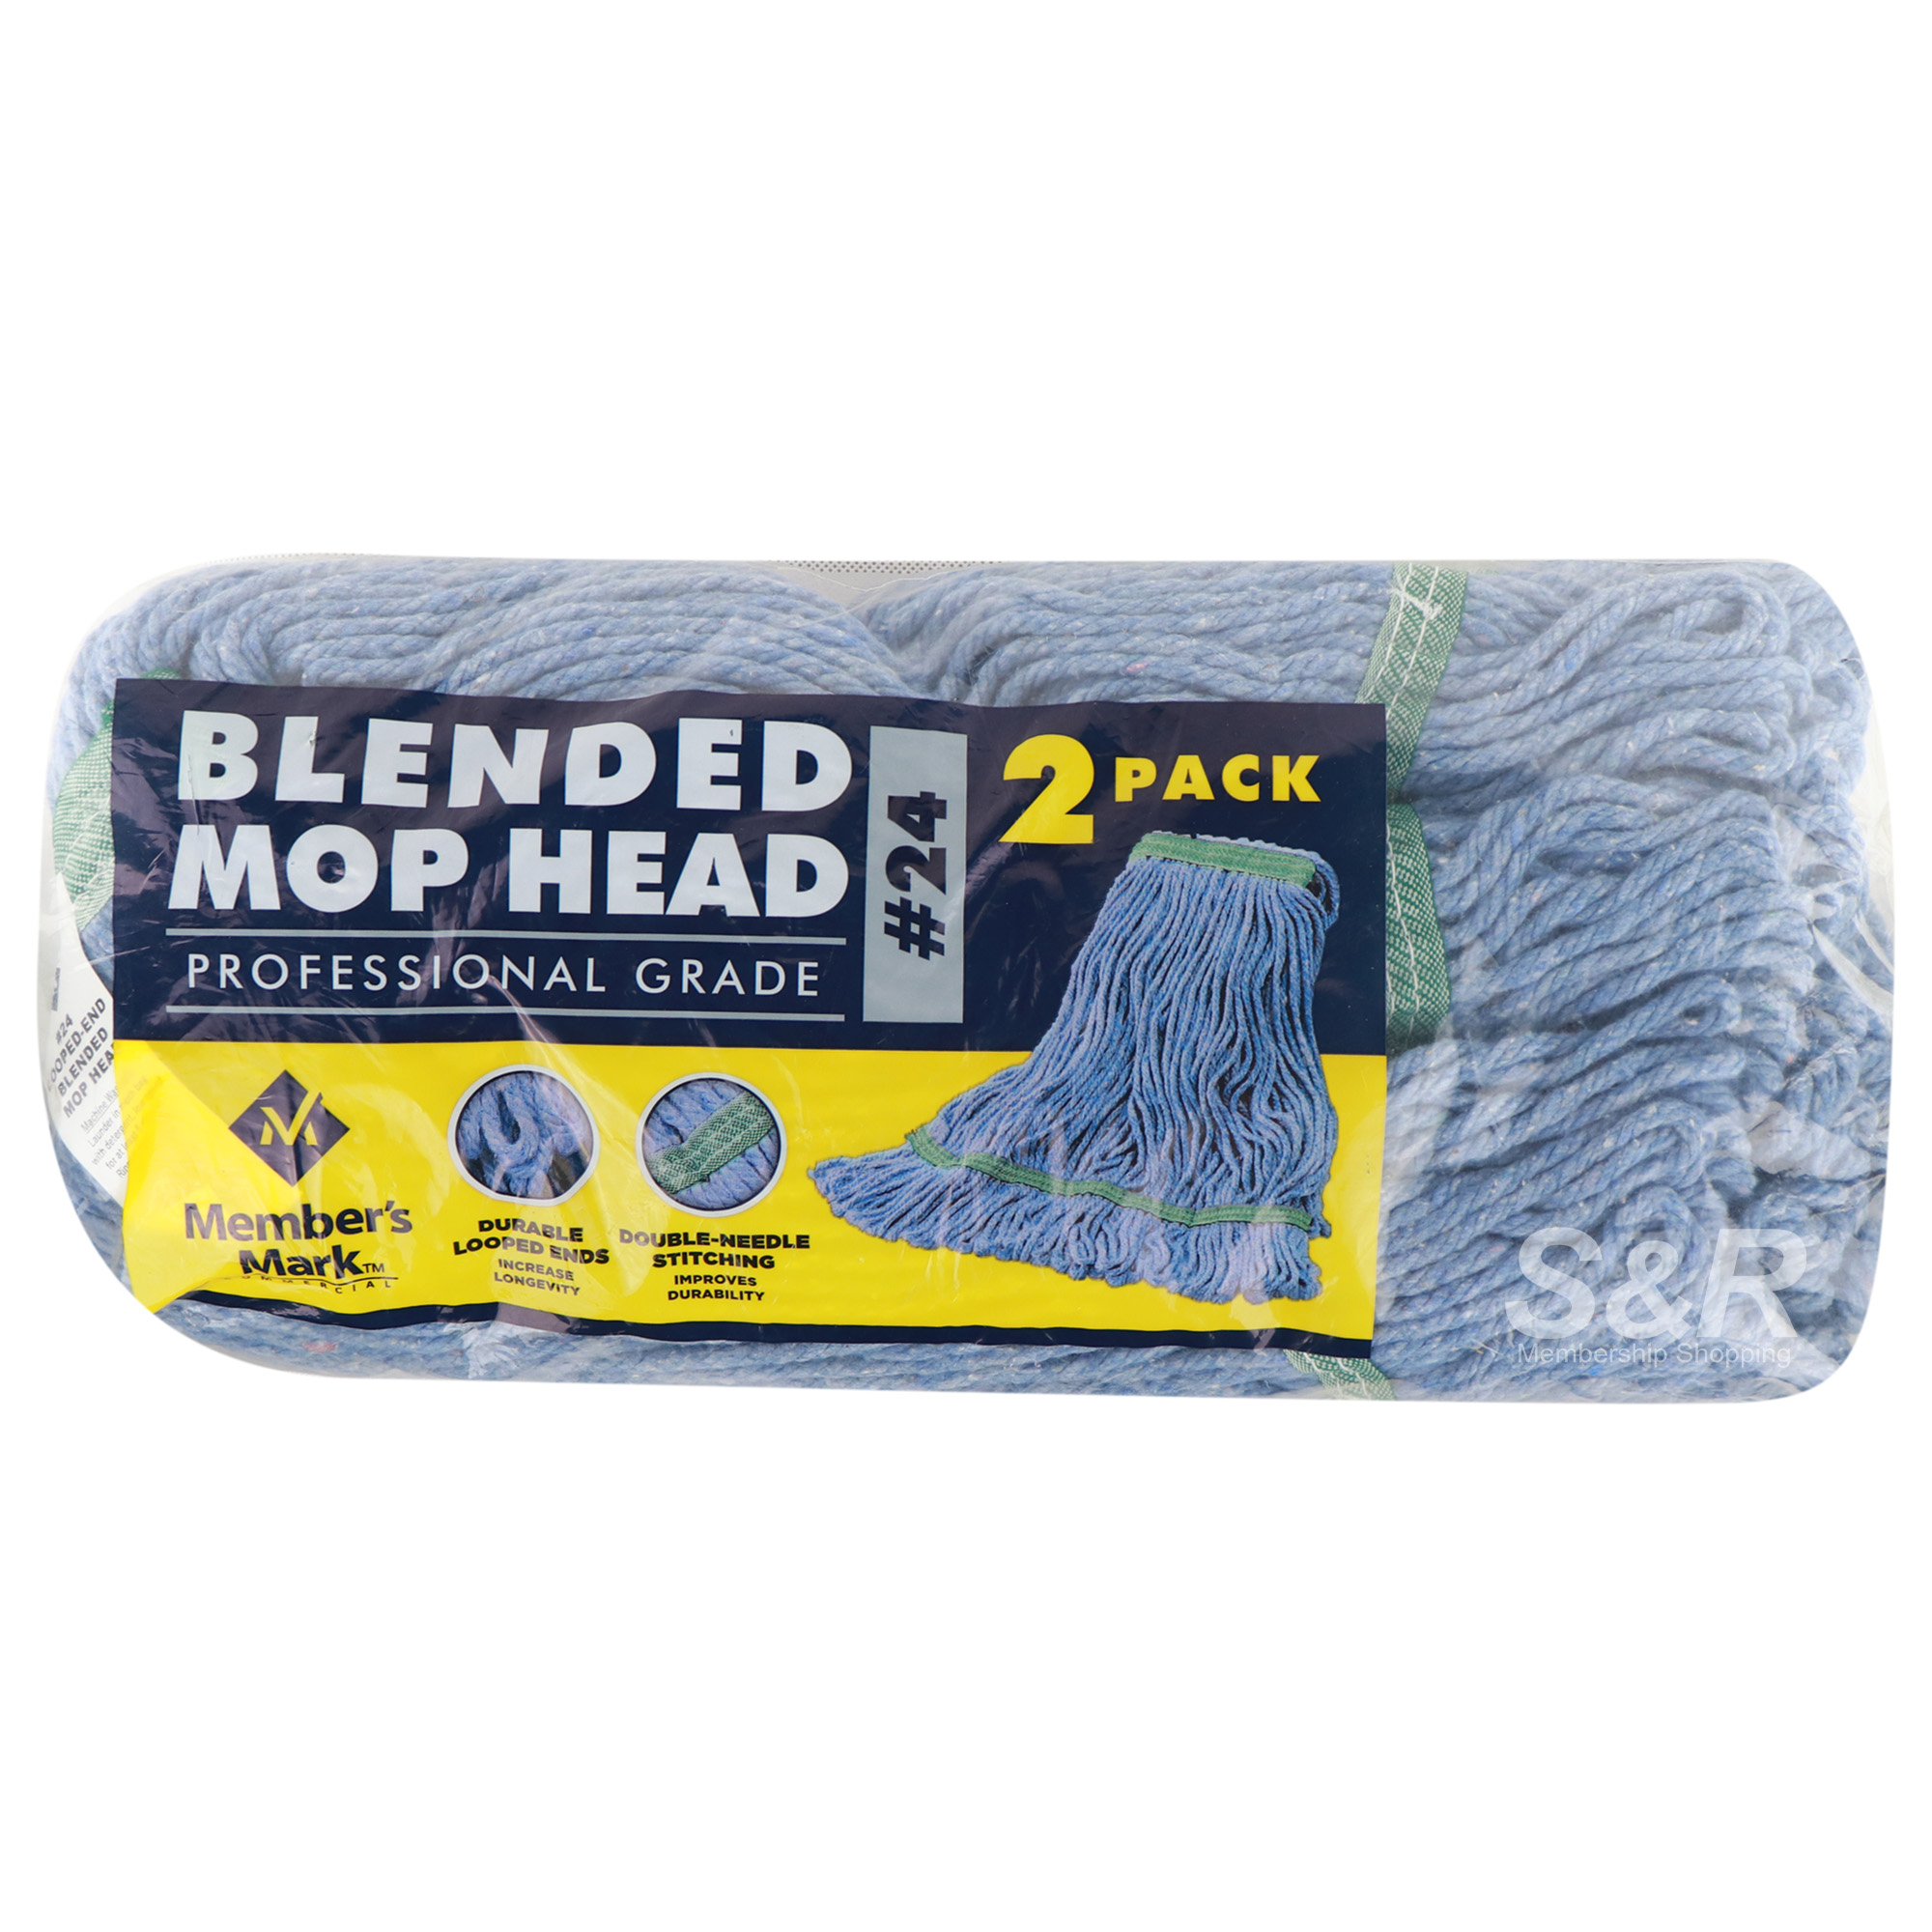 Member's Mark Blended Mop Head Professional Grade #24 2pcs